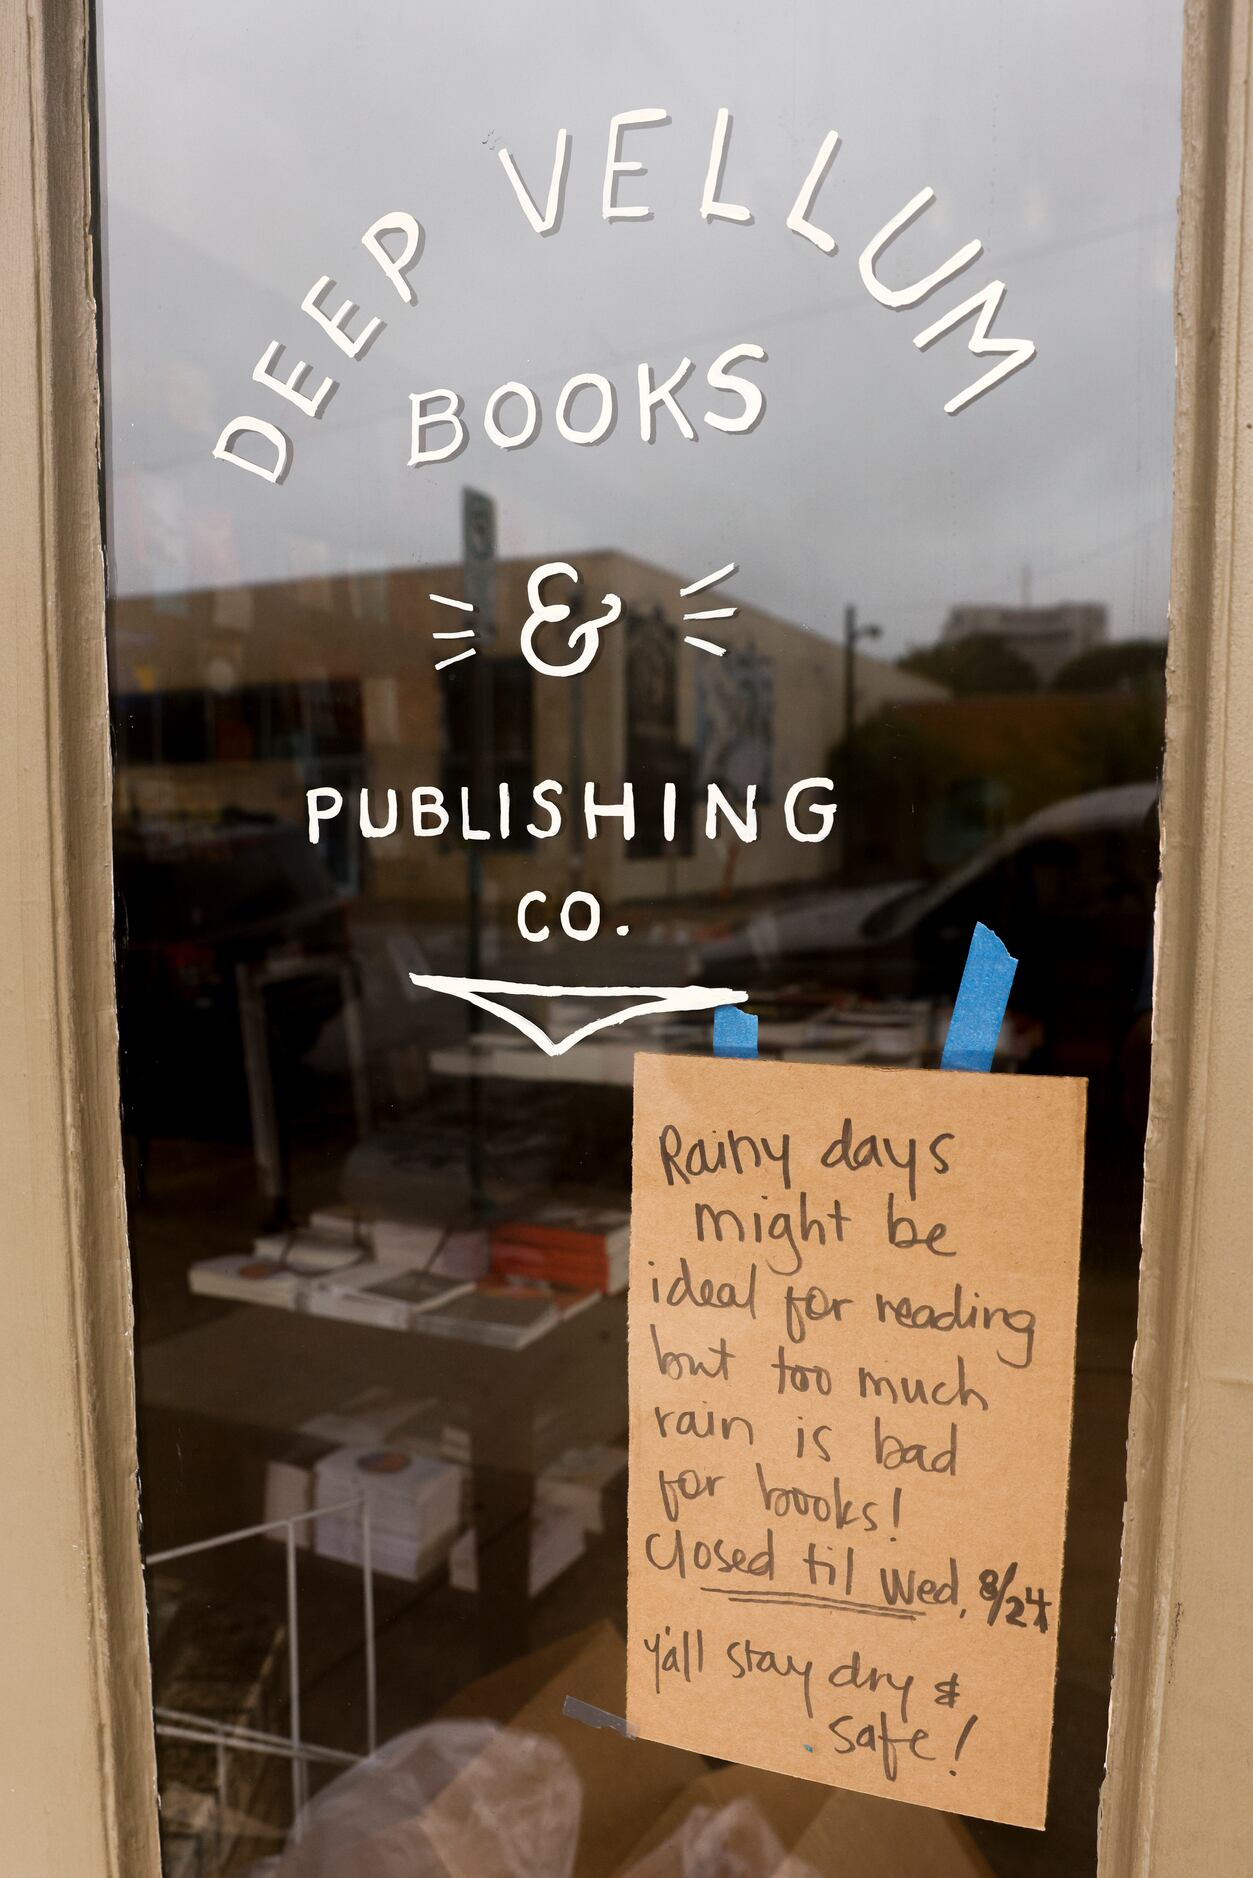 Backlist Book Club in Dallas at Deep Vellum Books